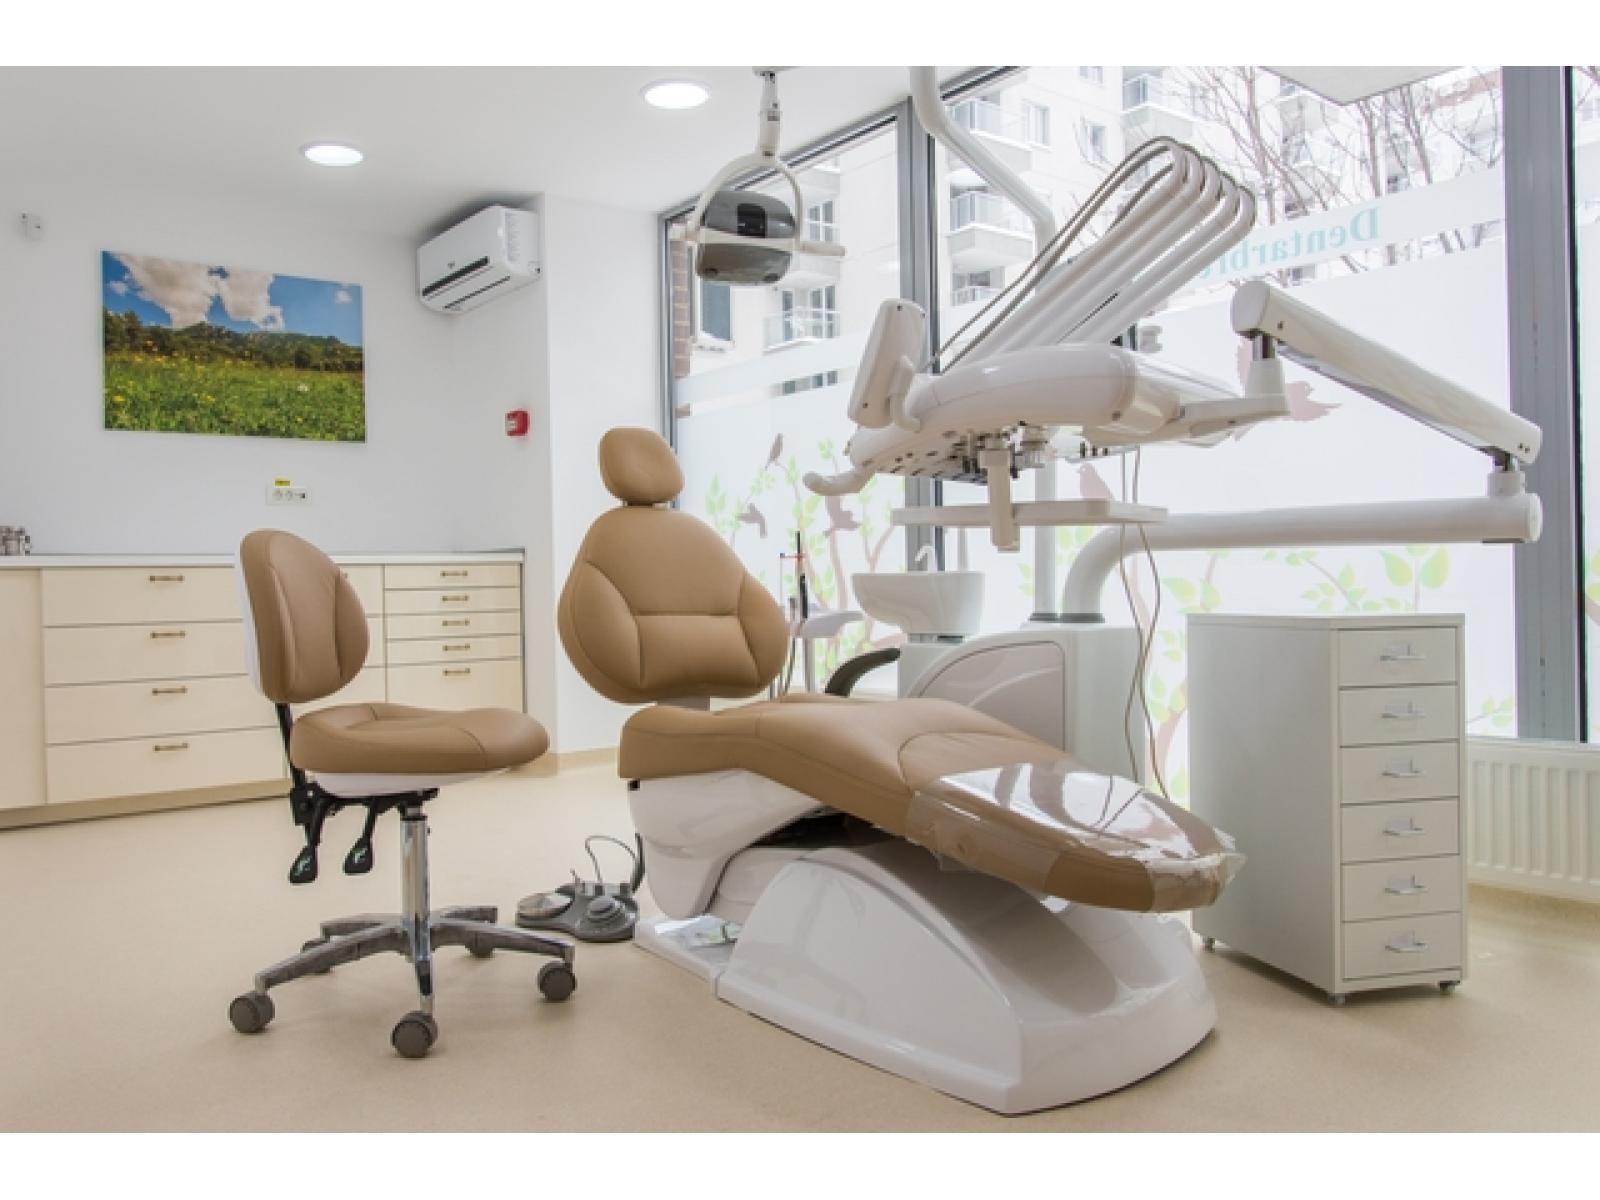 Dentarbre Dental Clinic - Cabinet_Stomatologic_sector_2_-_Dentarbre_Dental_Clinic_-_www.dentarbre.com.jpg